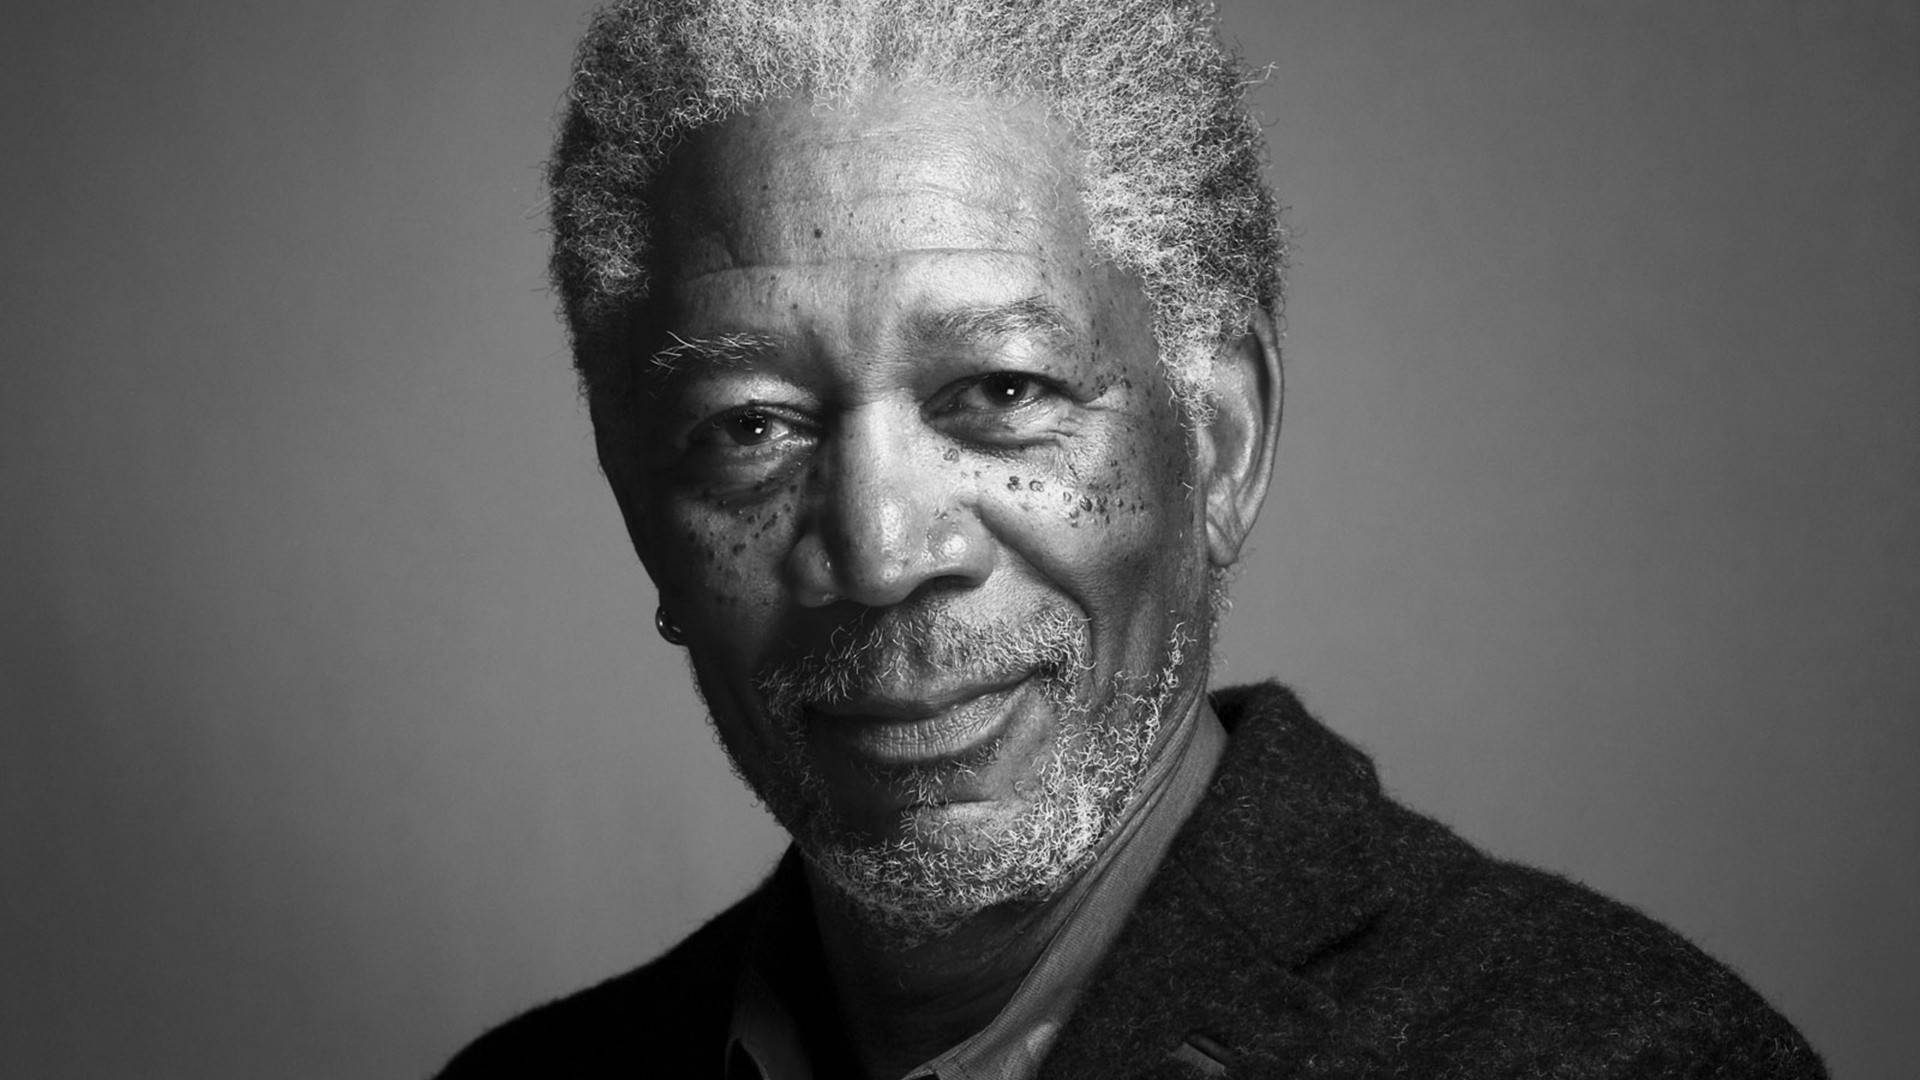 Baixar papel de parede para celular de Celebridade, Morgan Freeman gratuito.